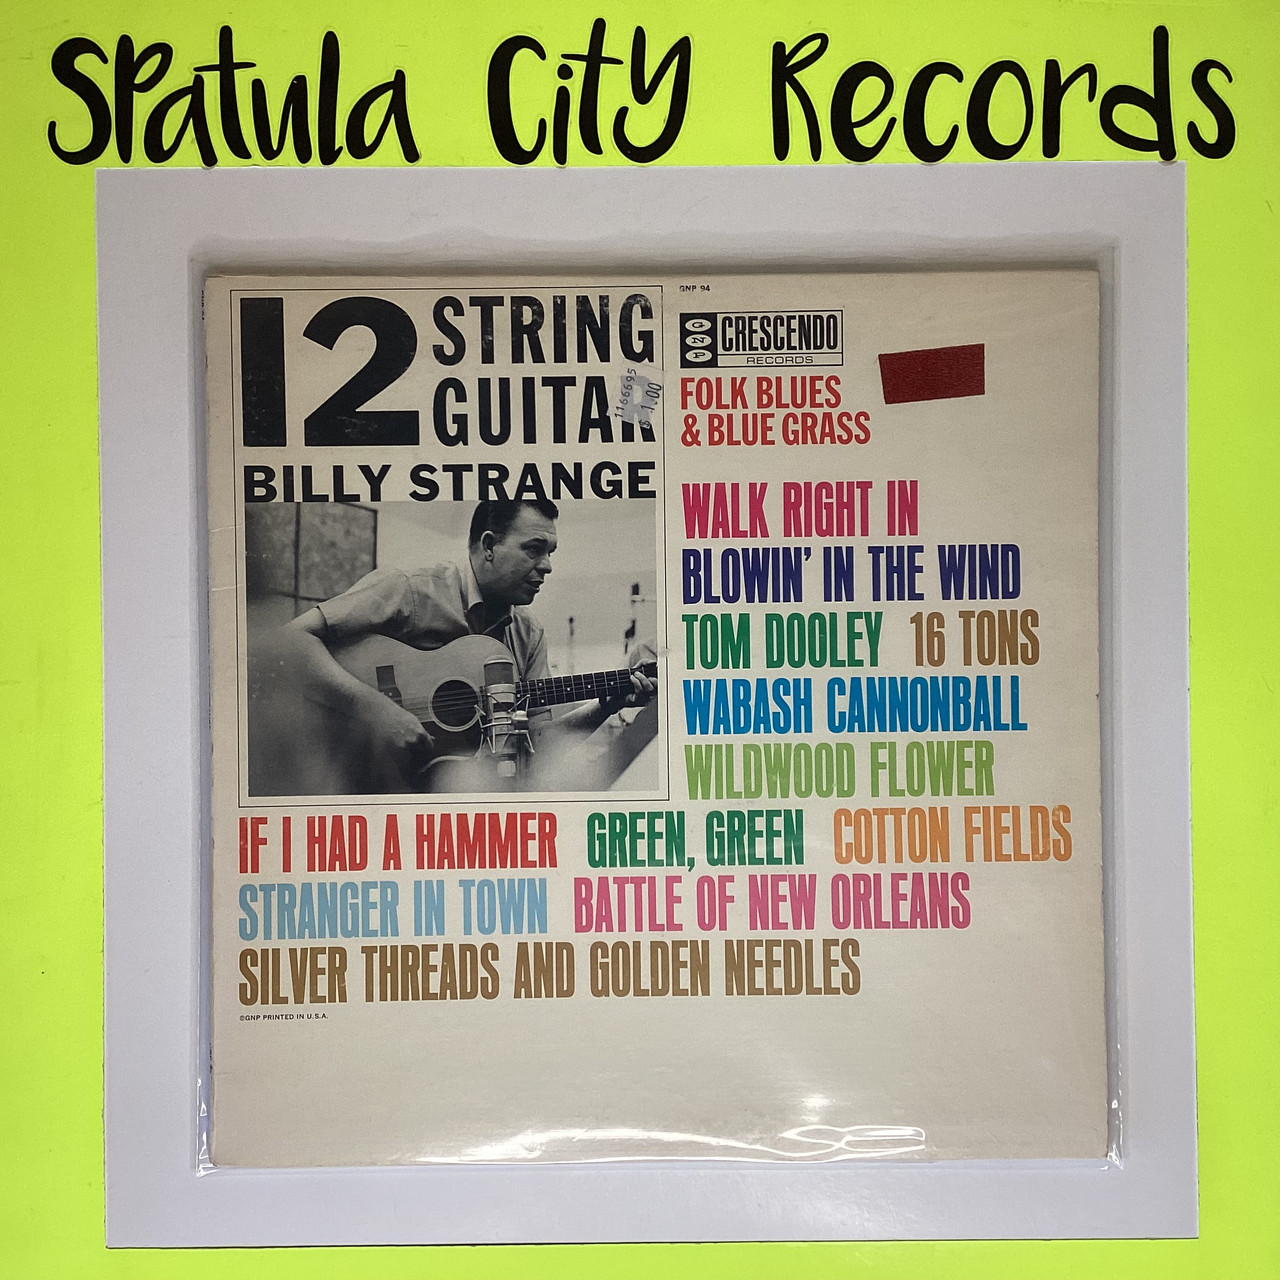 Billy Strange - 12 String Guitar - MONO - vinyl record LP